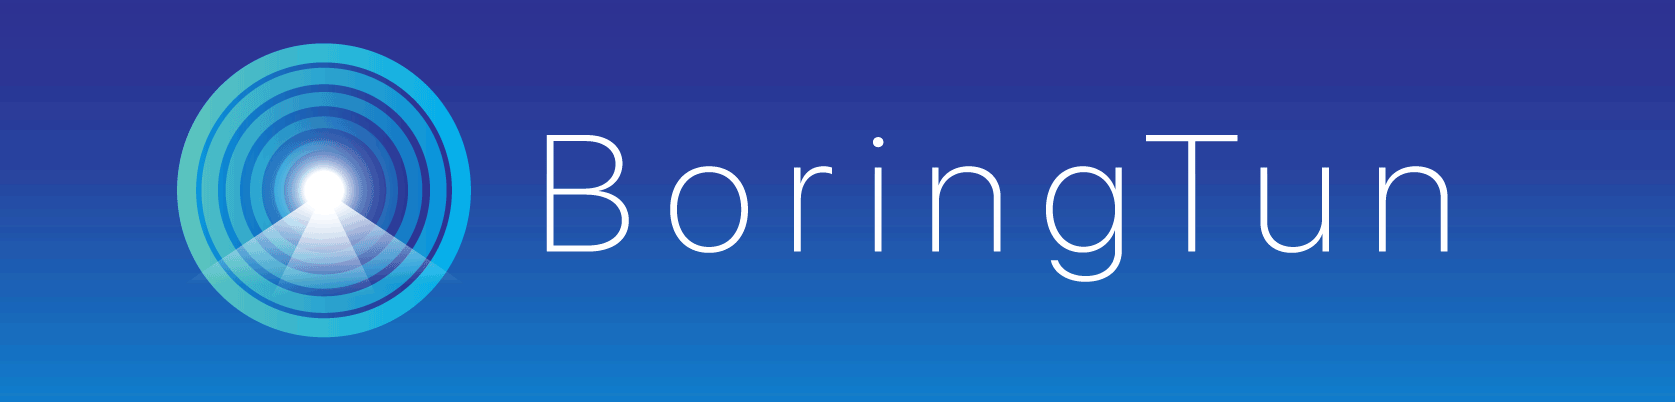 boring-tun-logo